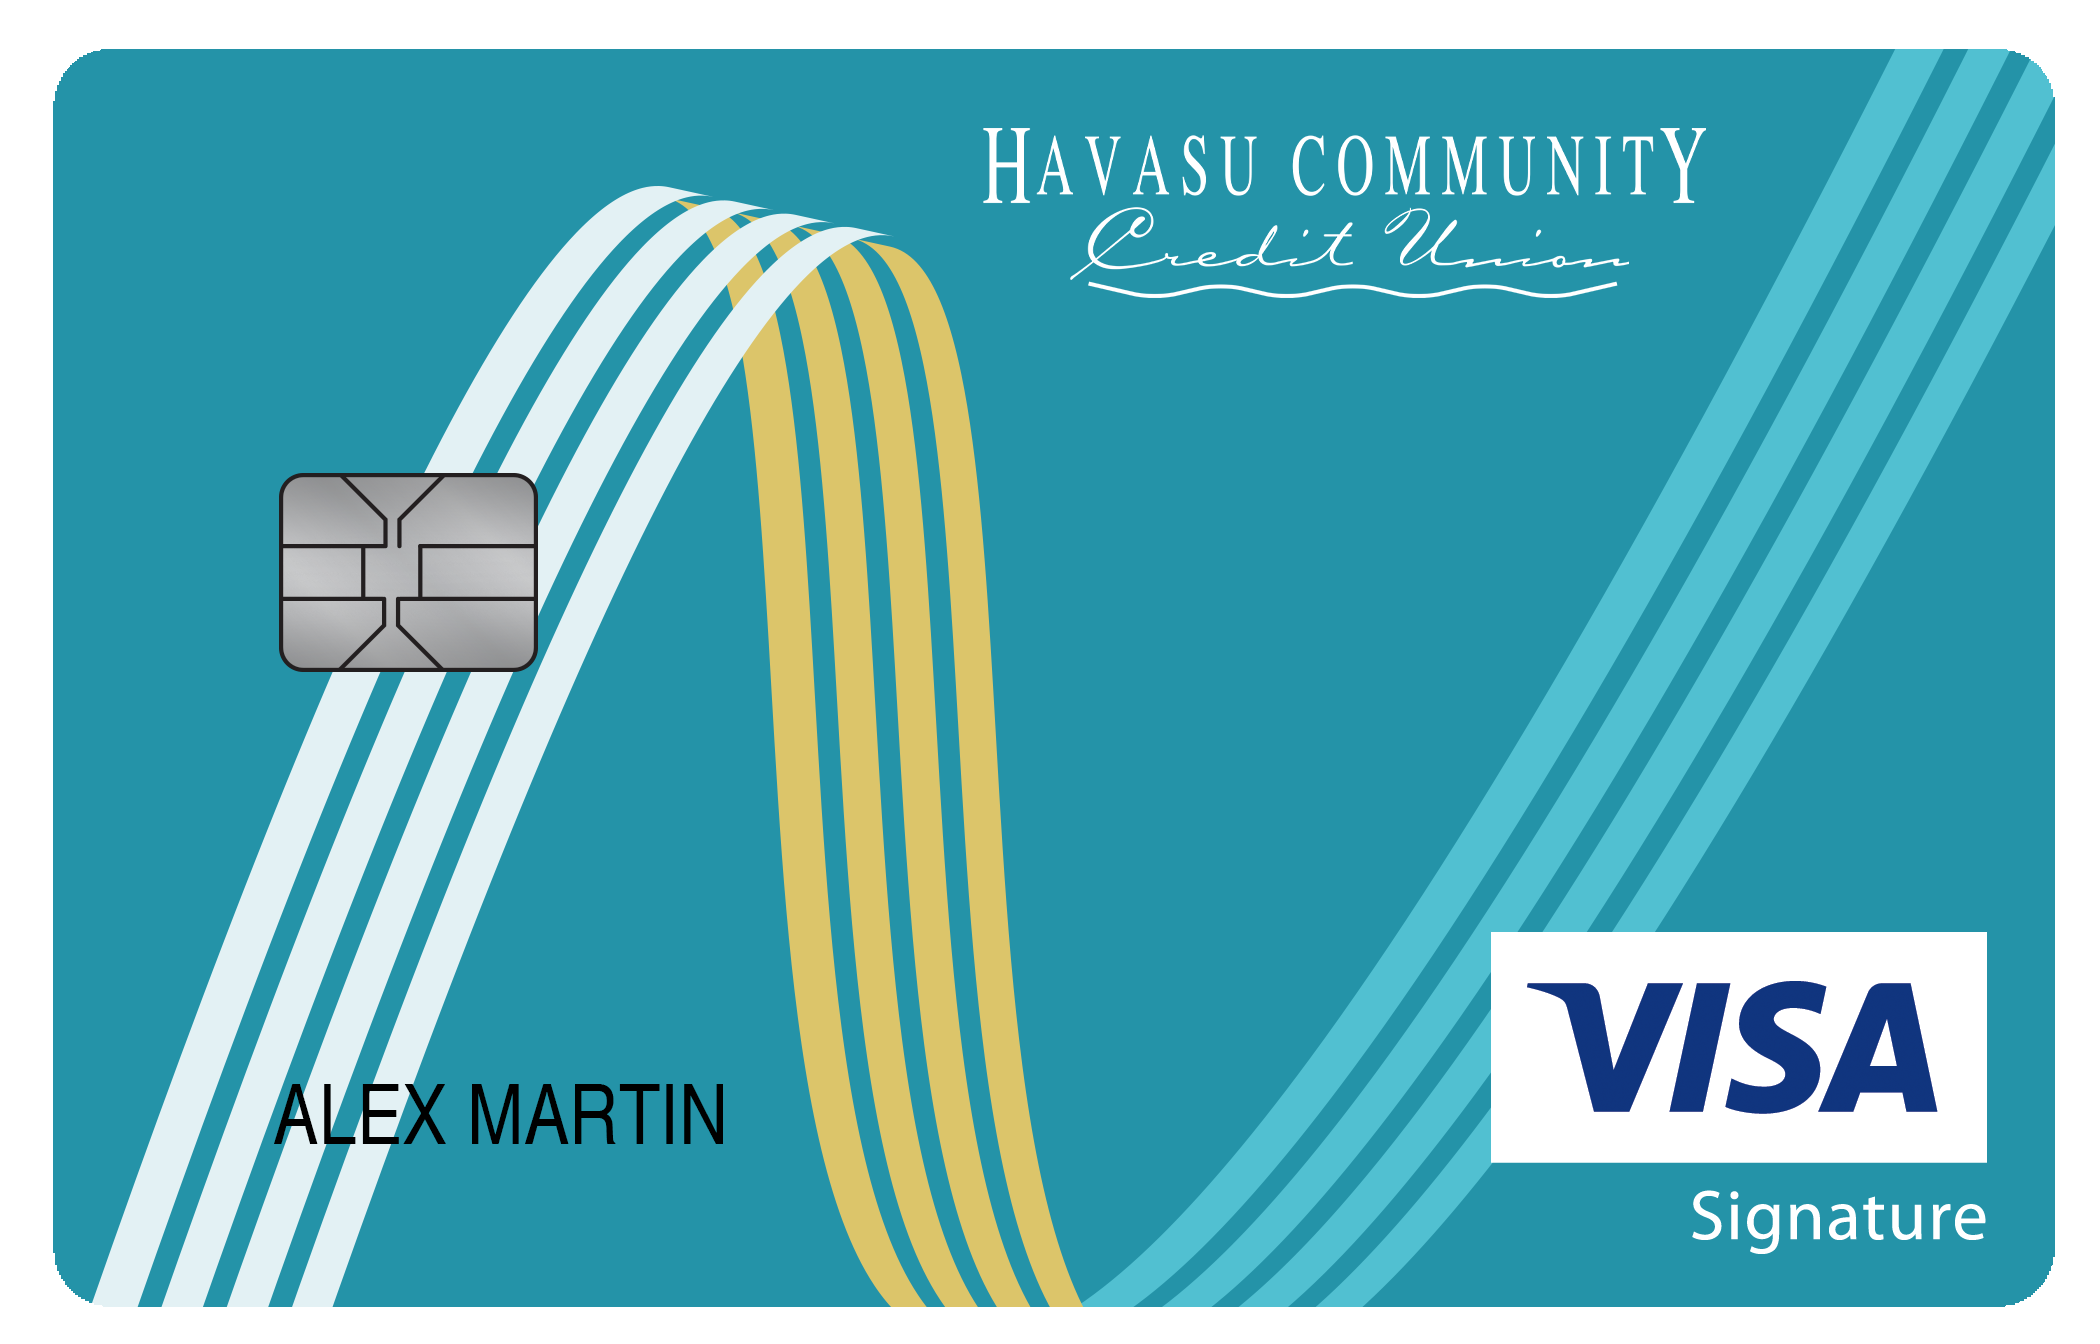 Havasu Community Credit Union